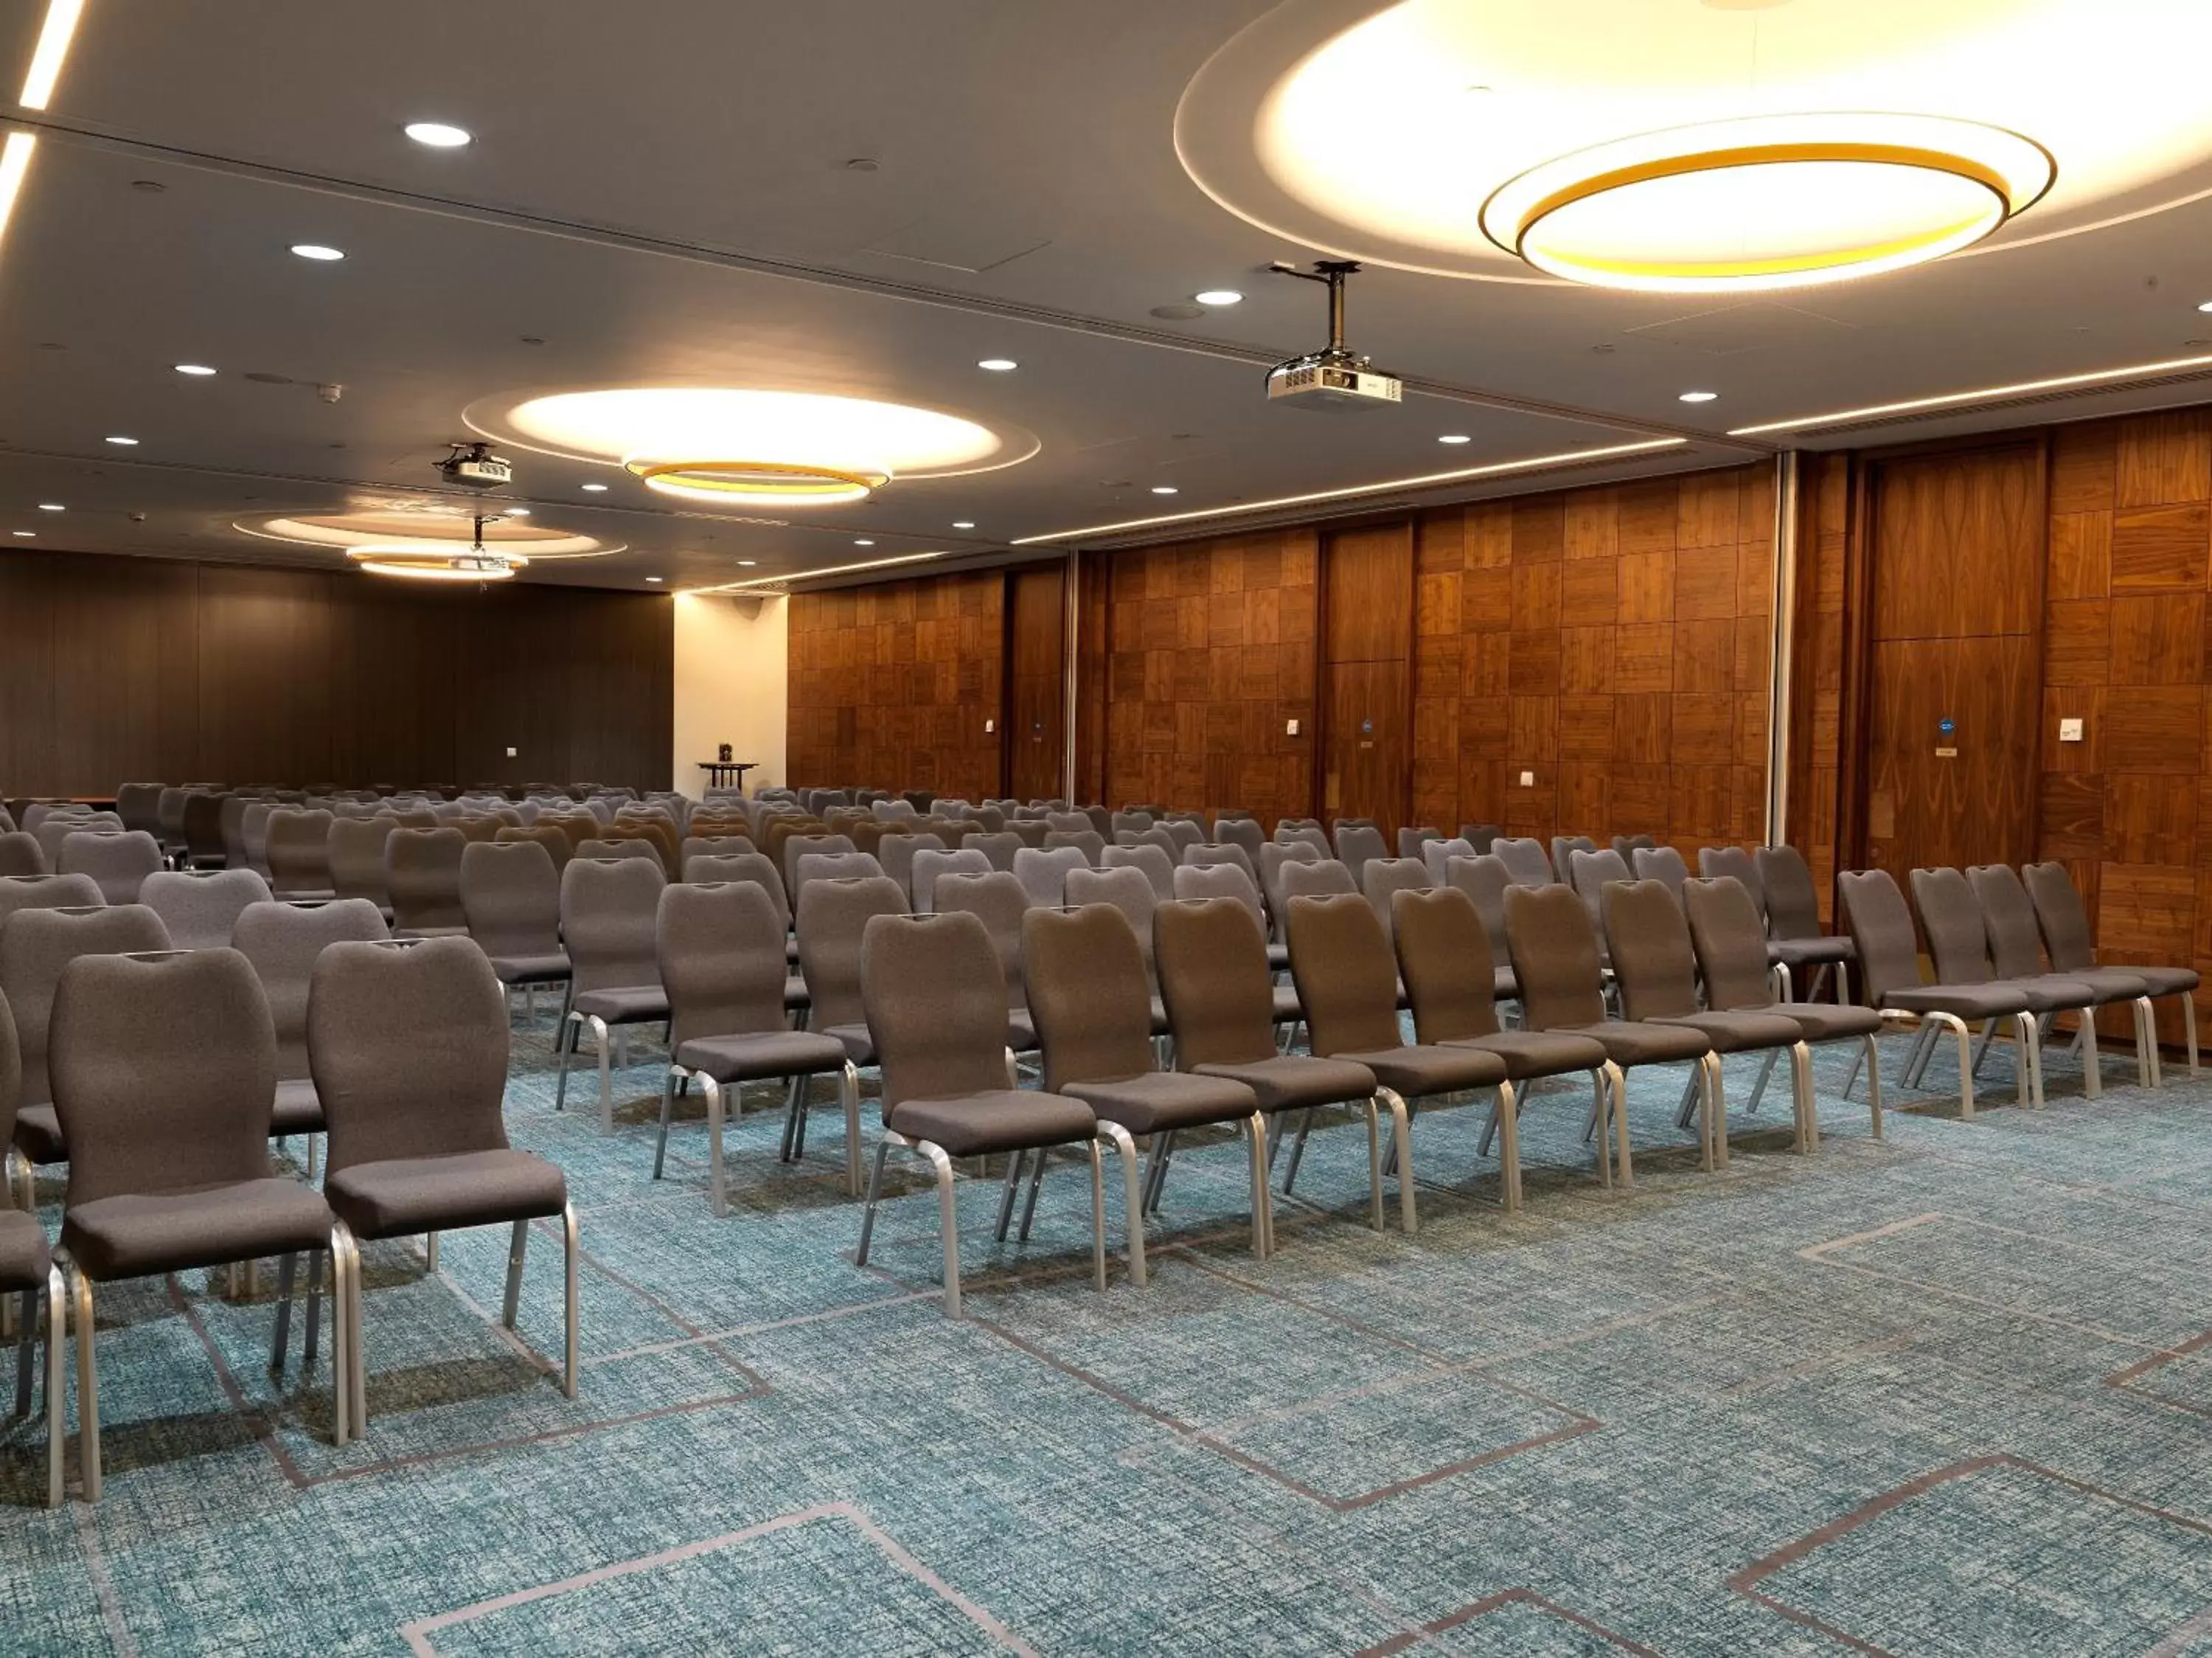 Meeting/conference room in Crowne Plaza London Kings Cross, an IHG Hotel